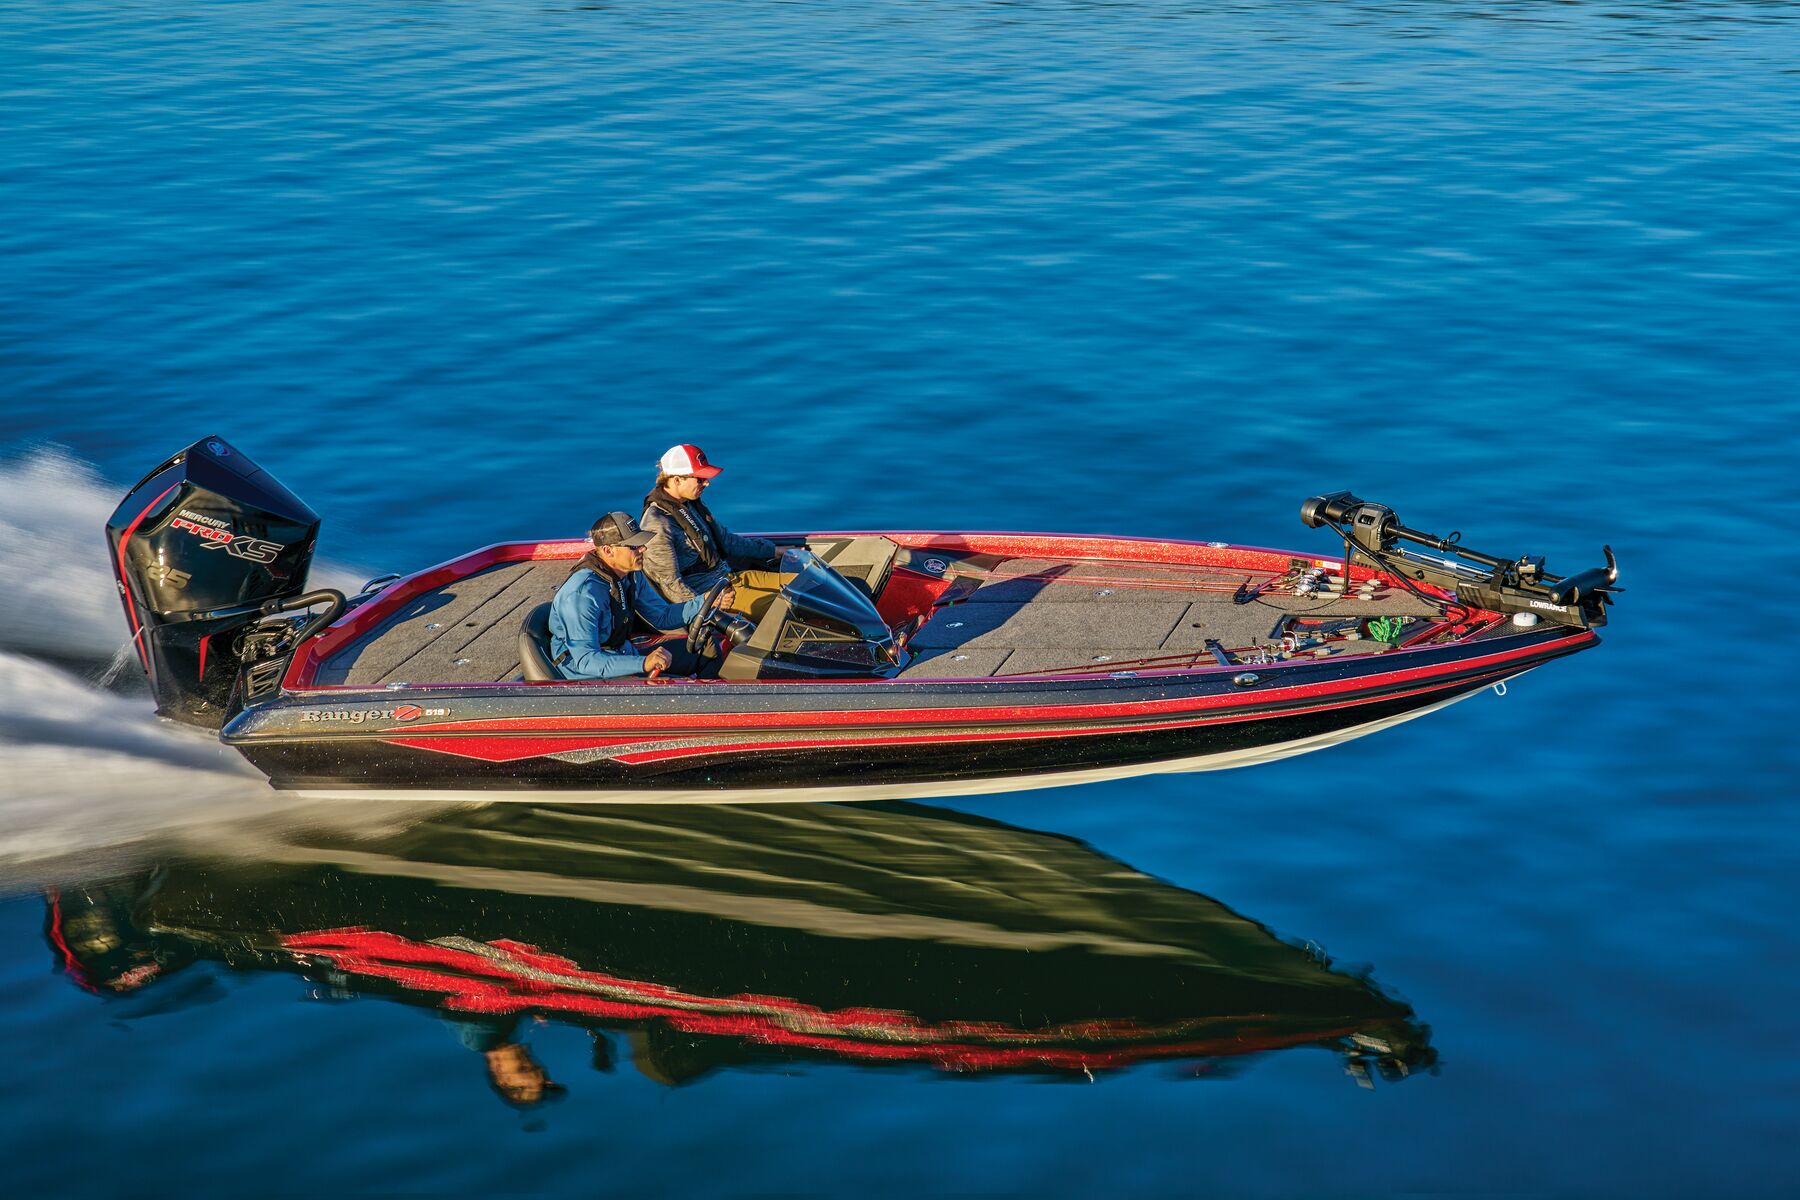 Man boating across a lake